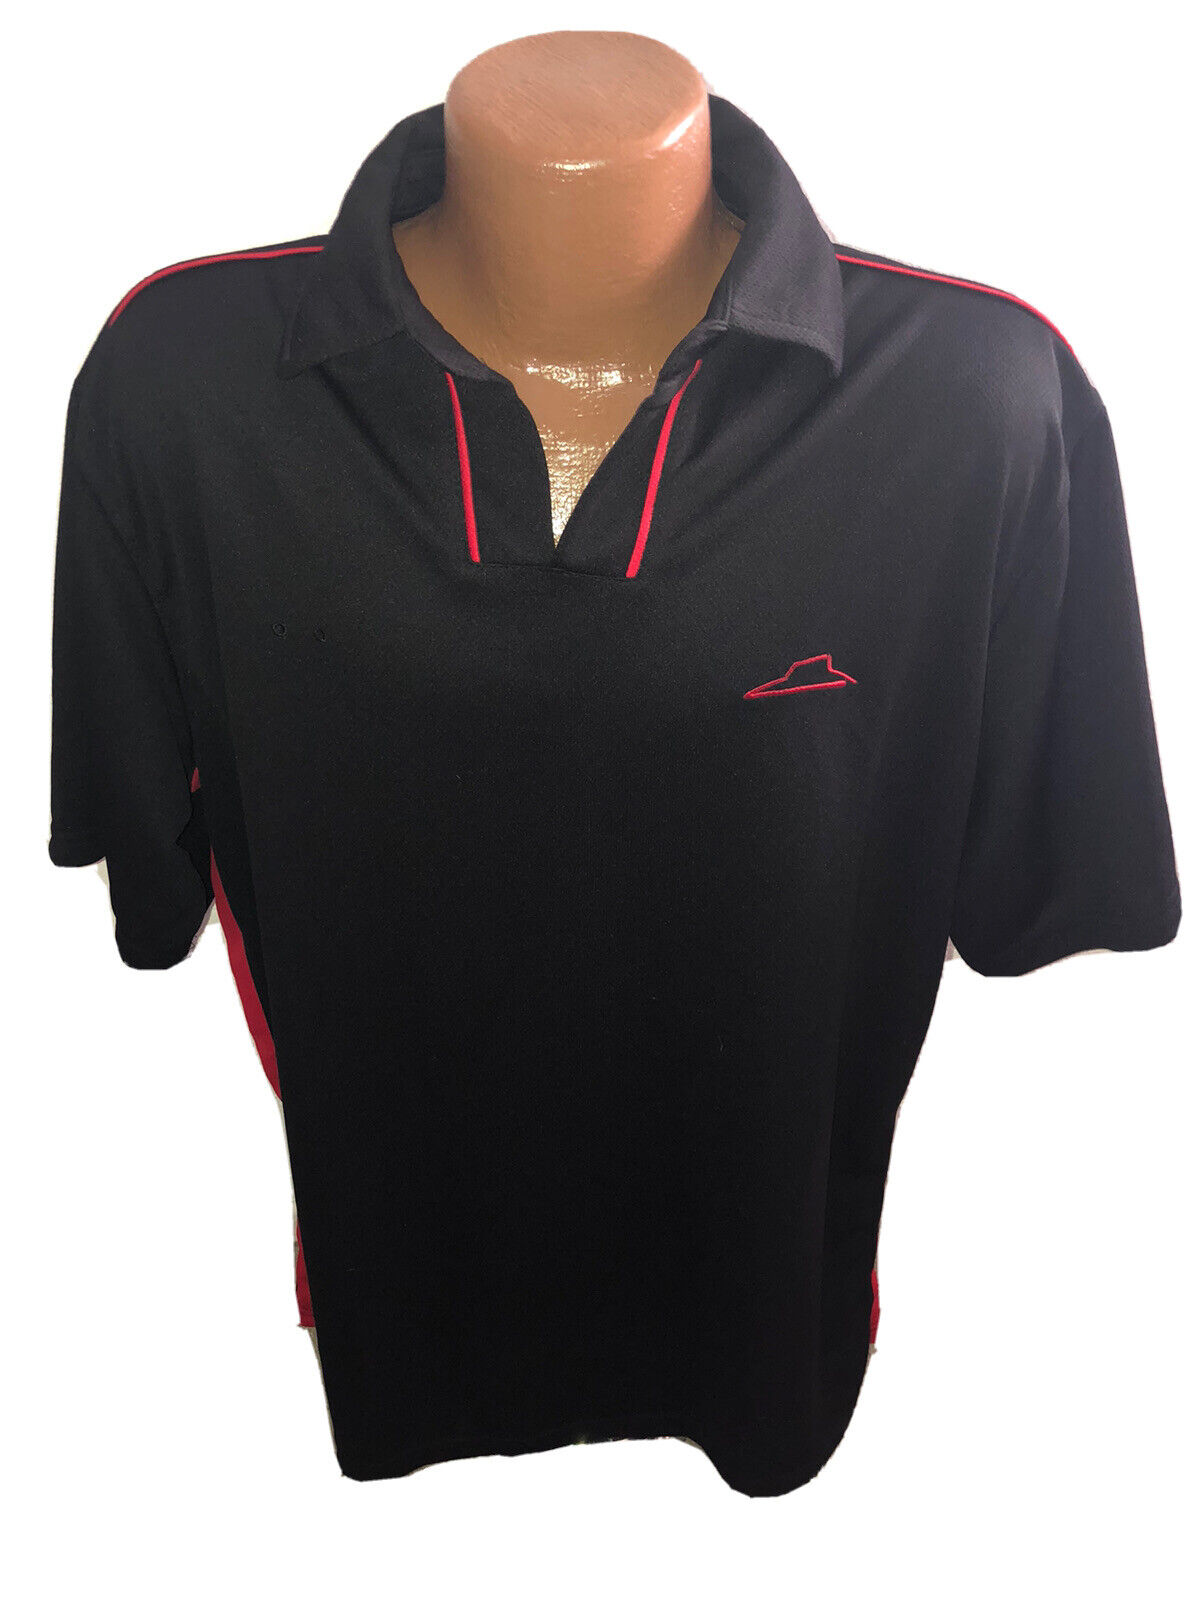 NWT Pizza Hut Employee Uniform Short Sleeve Polo Shirt Men's Siz